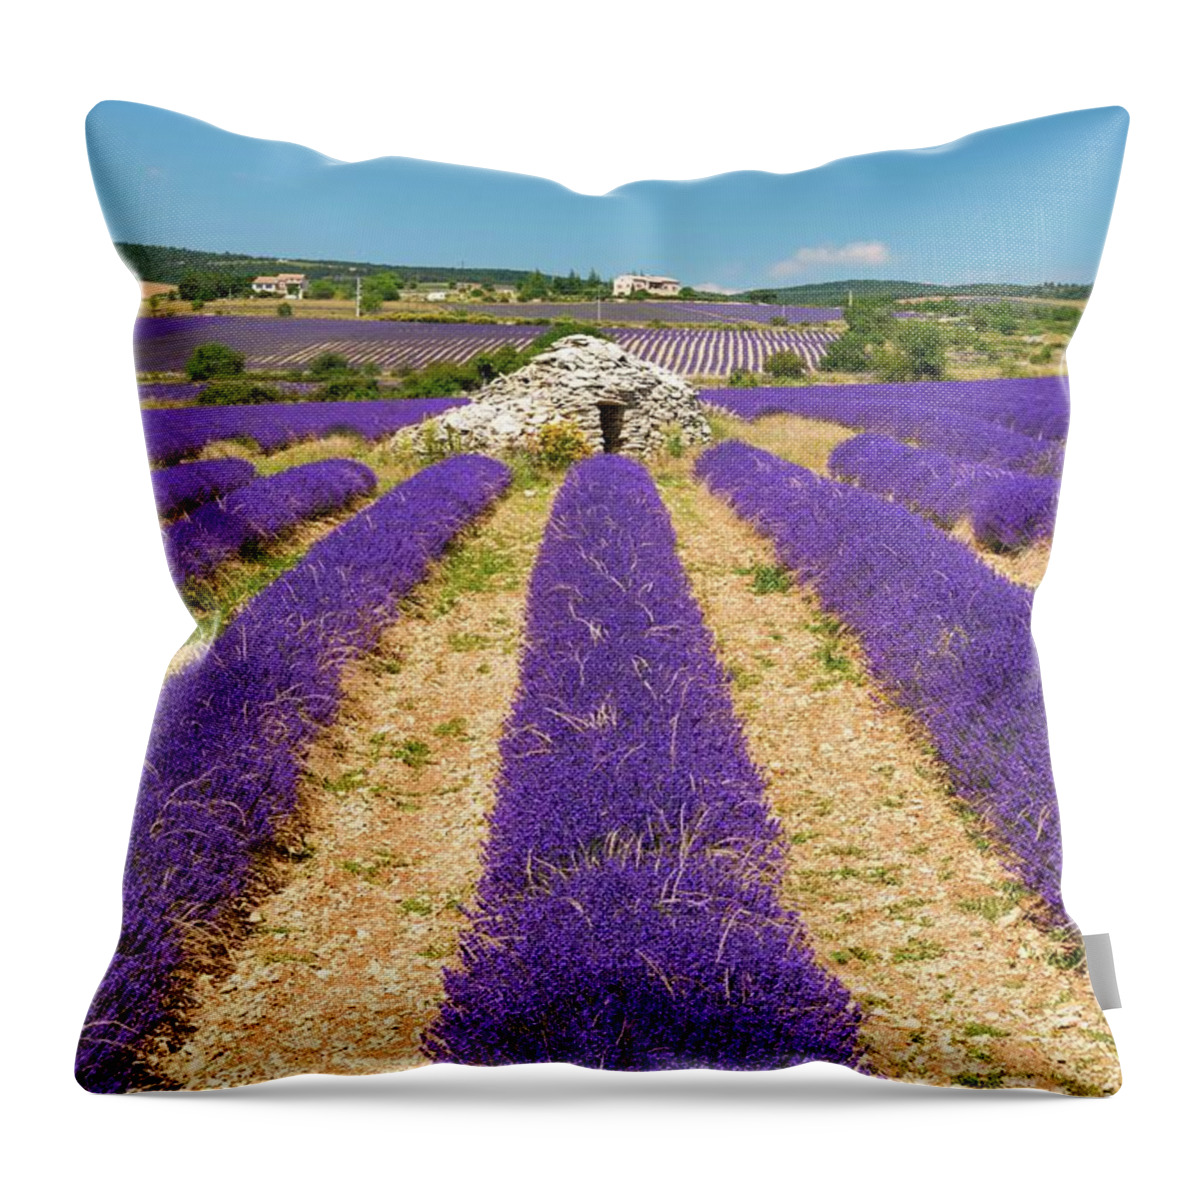 Estock Throw Pillow featuring the digital art France, Provence-alpes-cote D'azur, Sault, Lavender Field by Jordan Banks